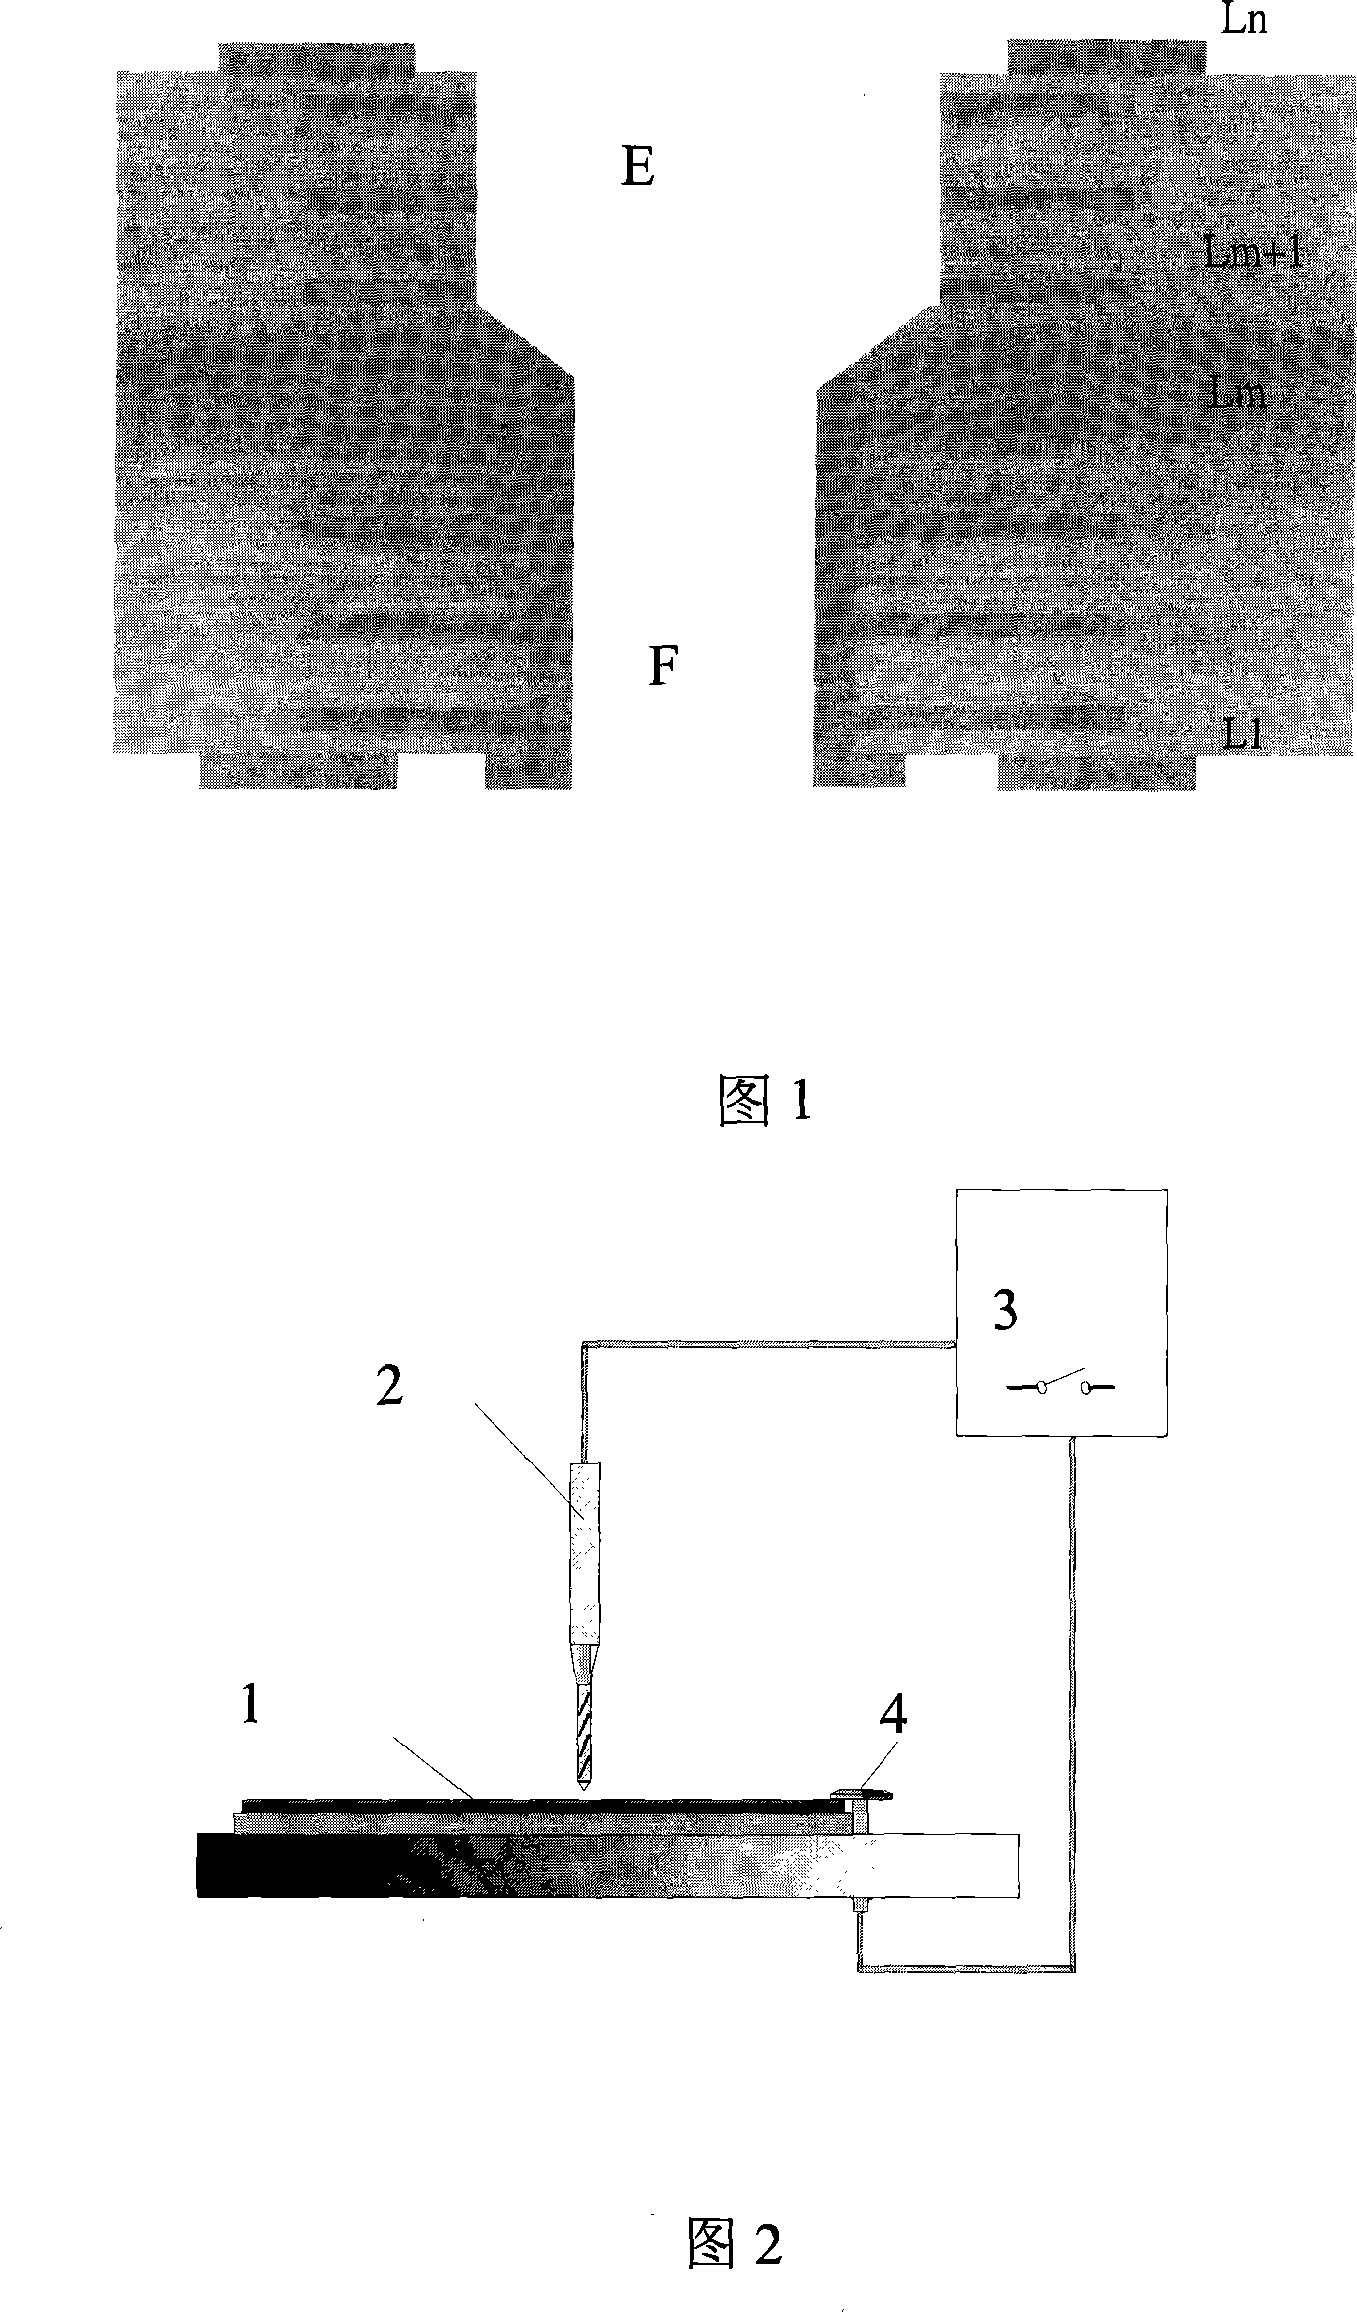 Method for deep drilling print circuit board